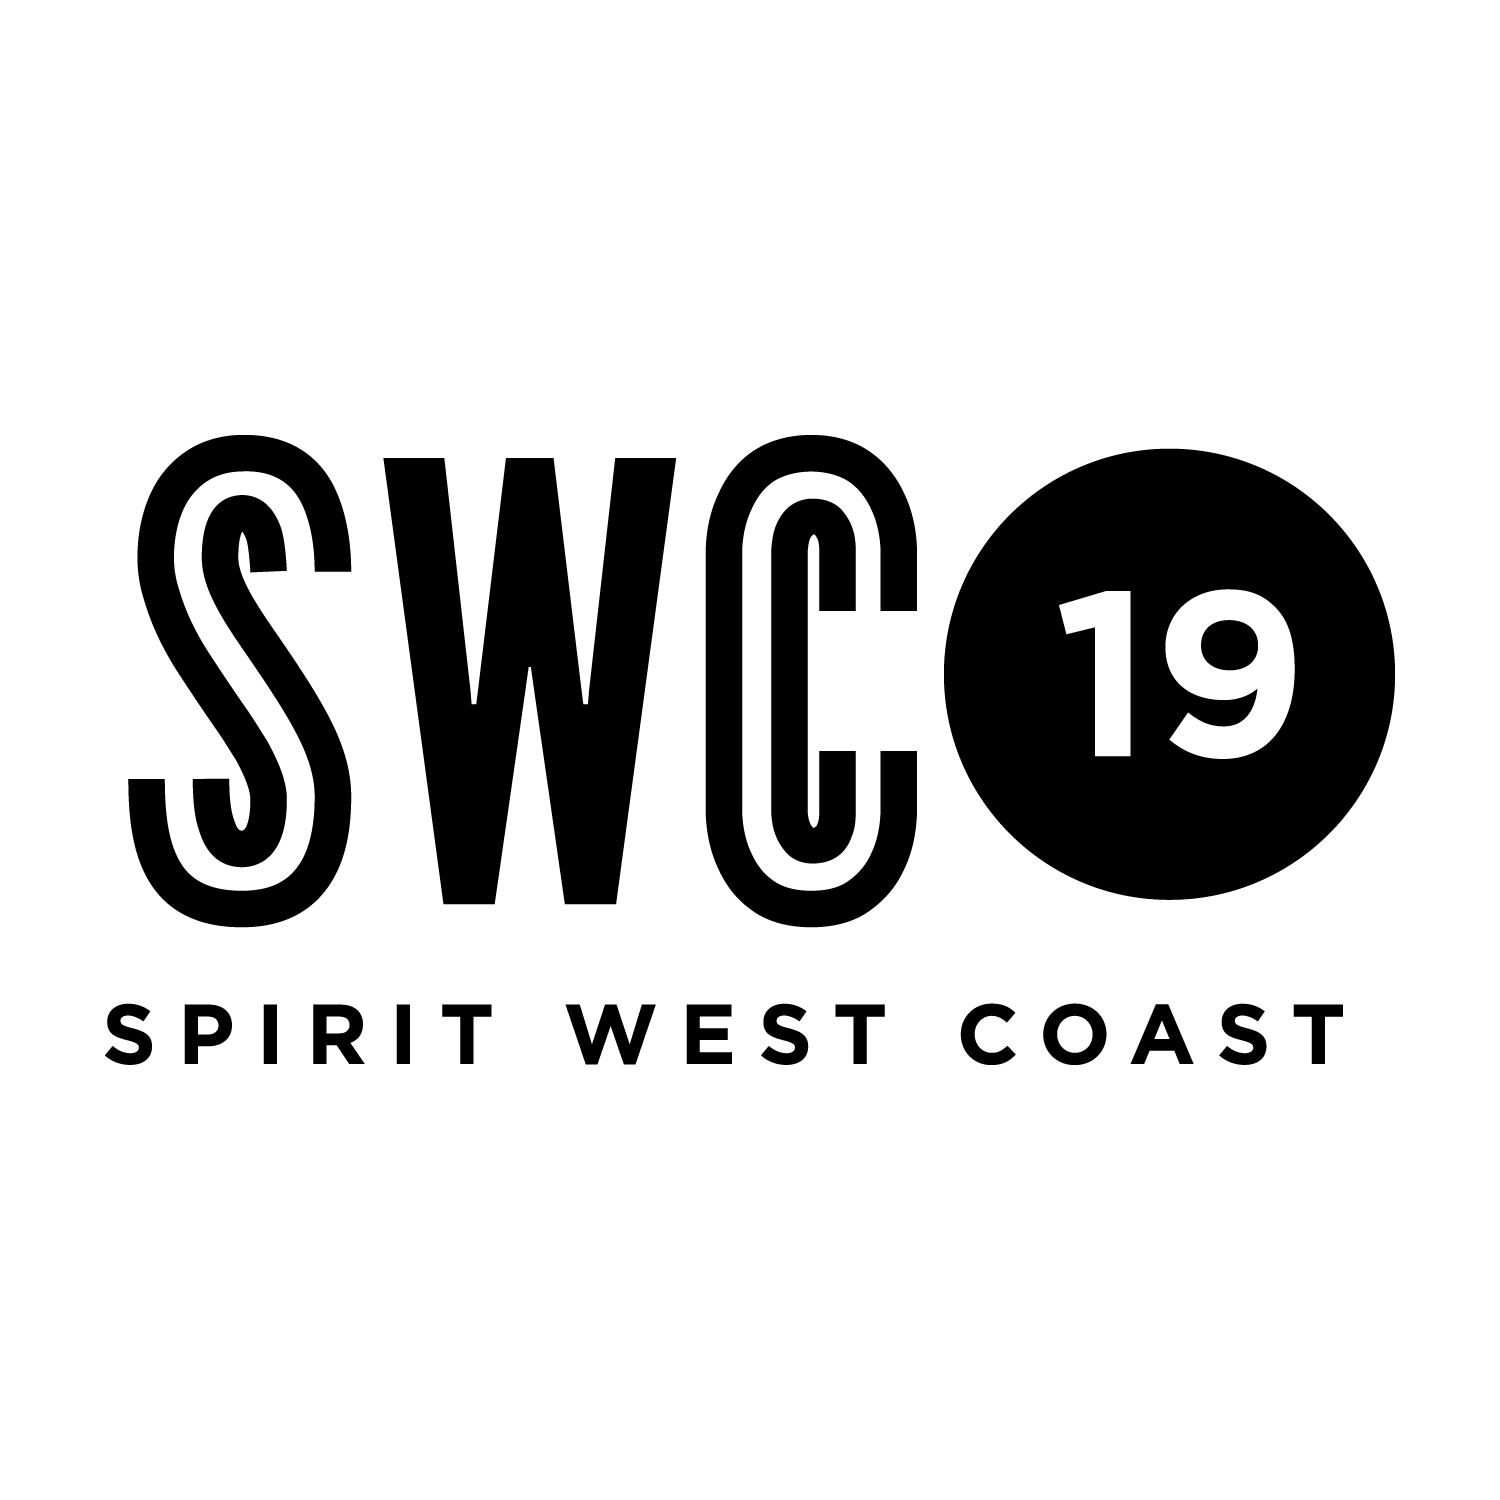 Coast Logo - Spirit West Coast Inland Empire